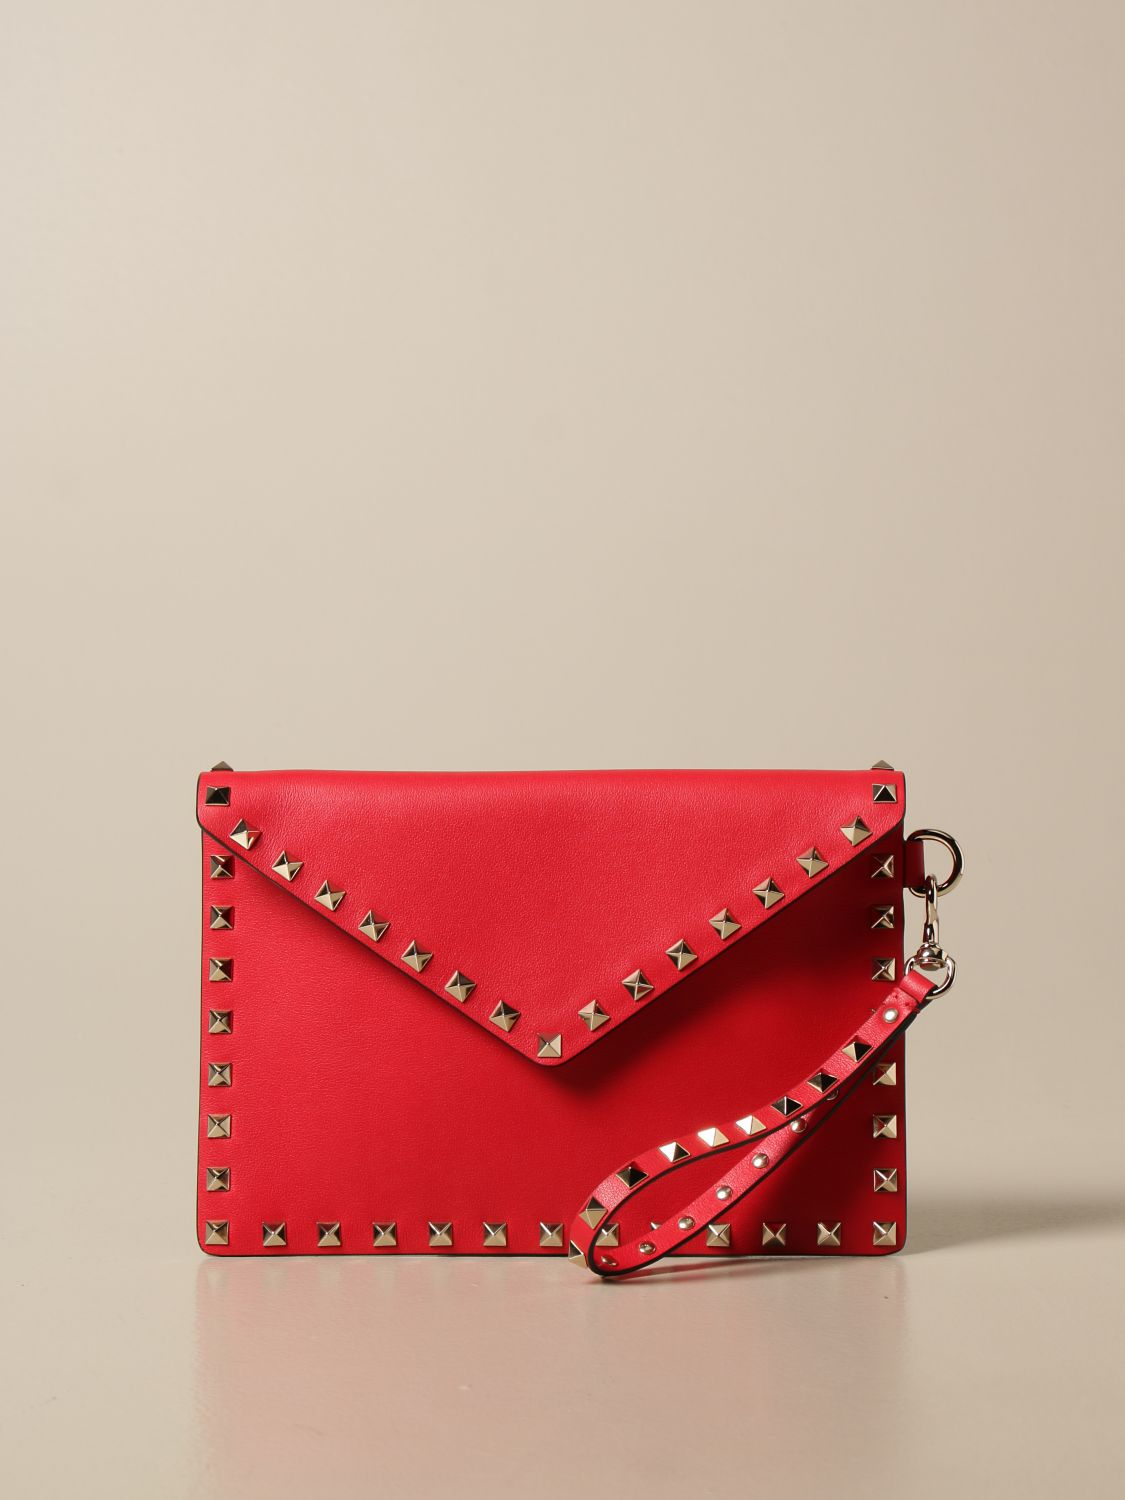 VALENTINO GARAVANI: Rockstud envelope clutch in leather with studs - Red